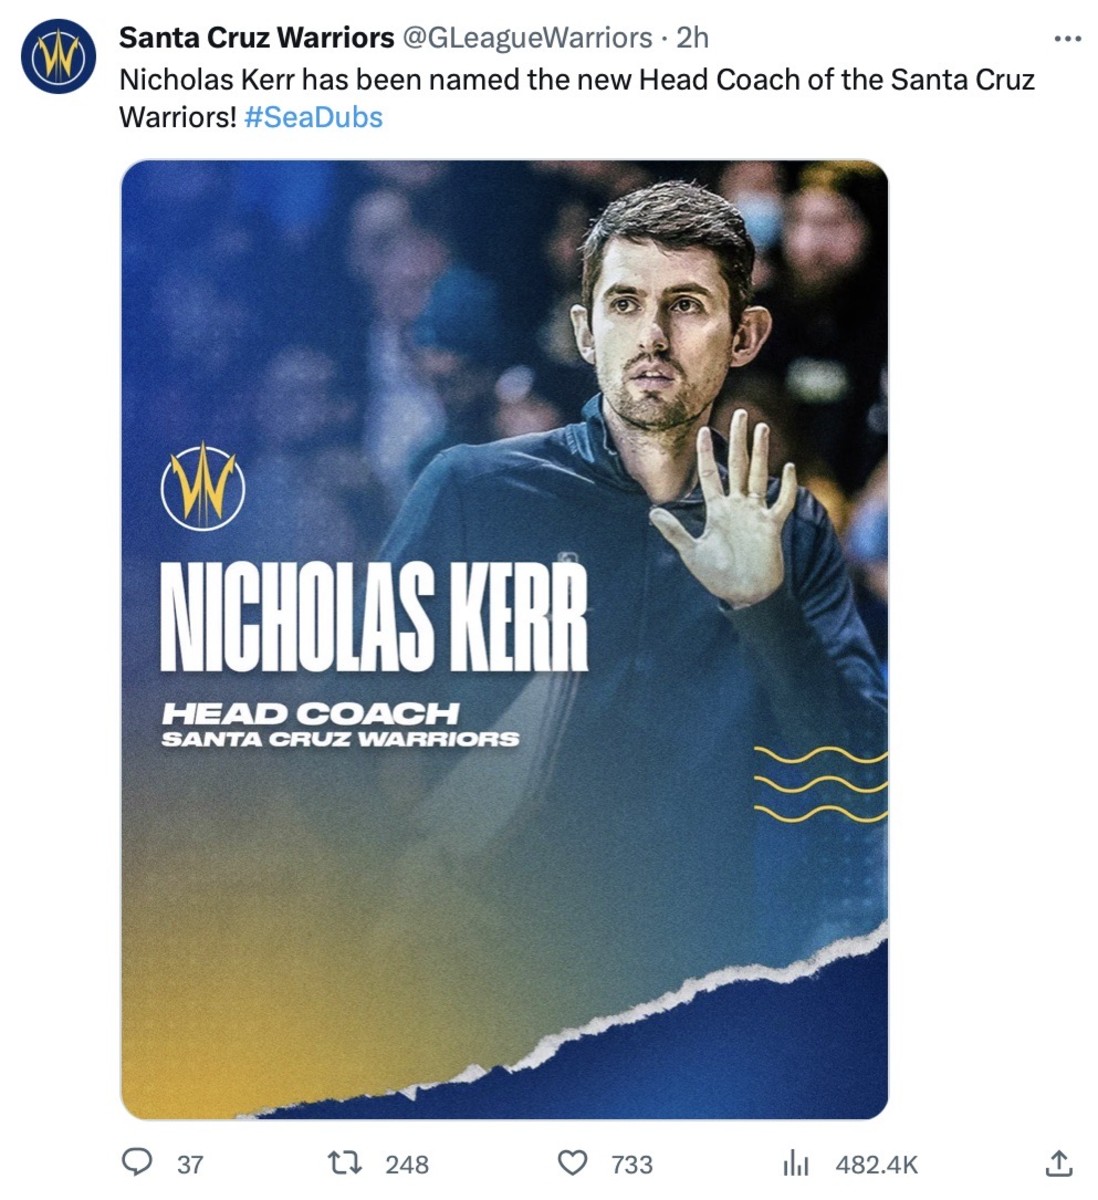 Nicholas Kerr is promoted